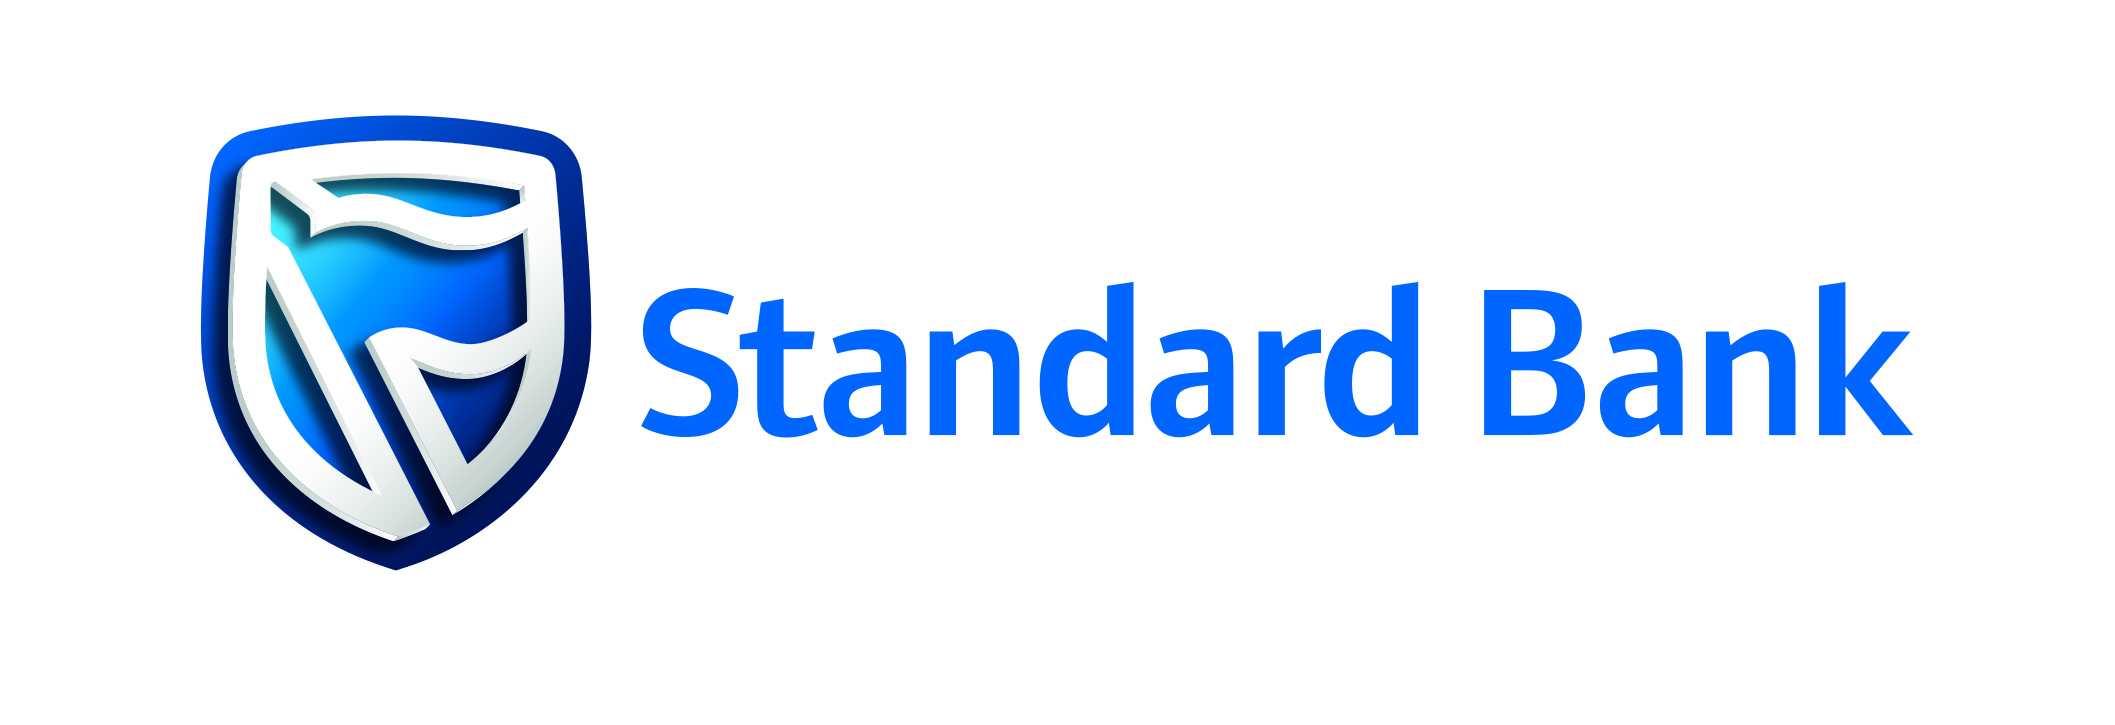 Standard Bank Group Ltd.